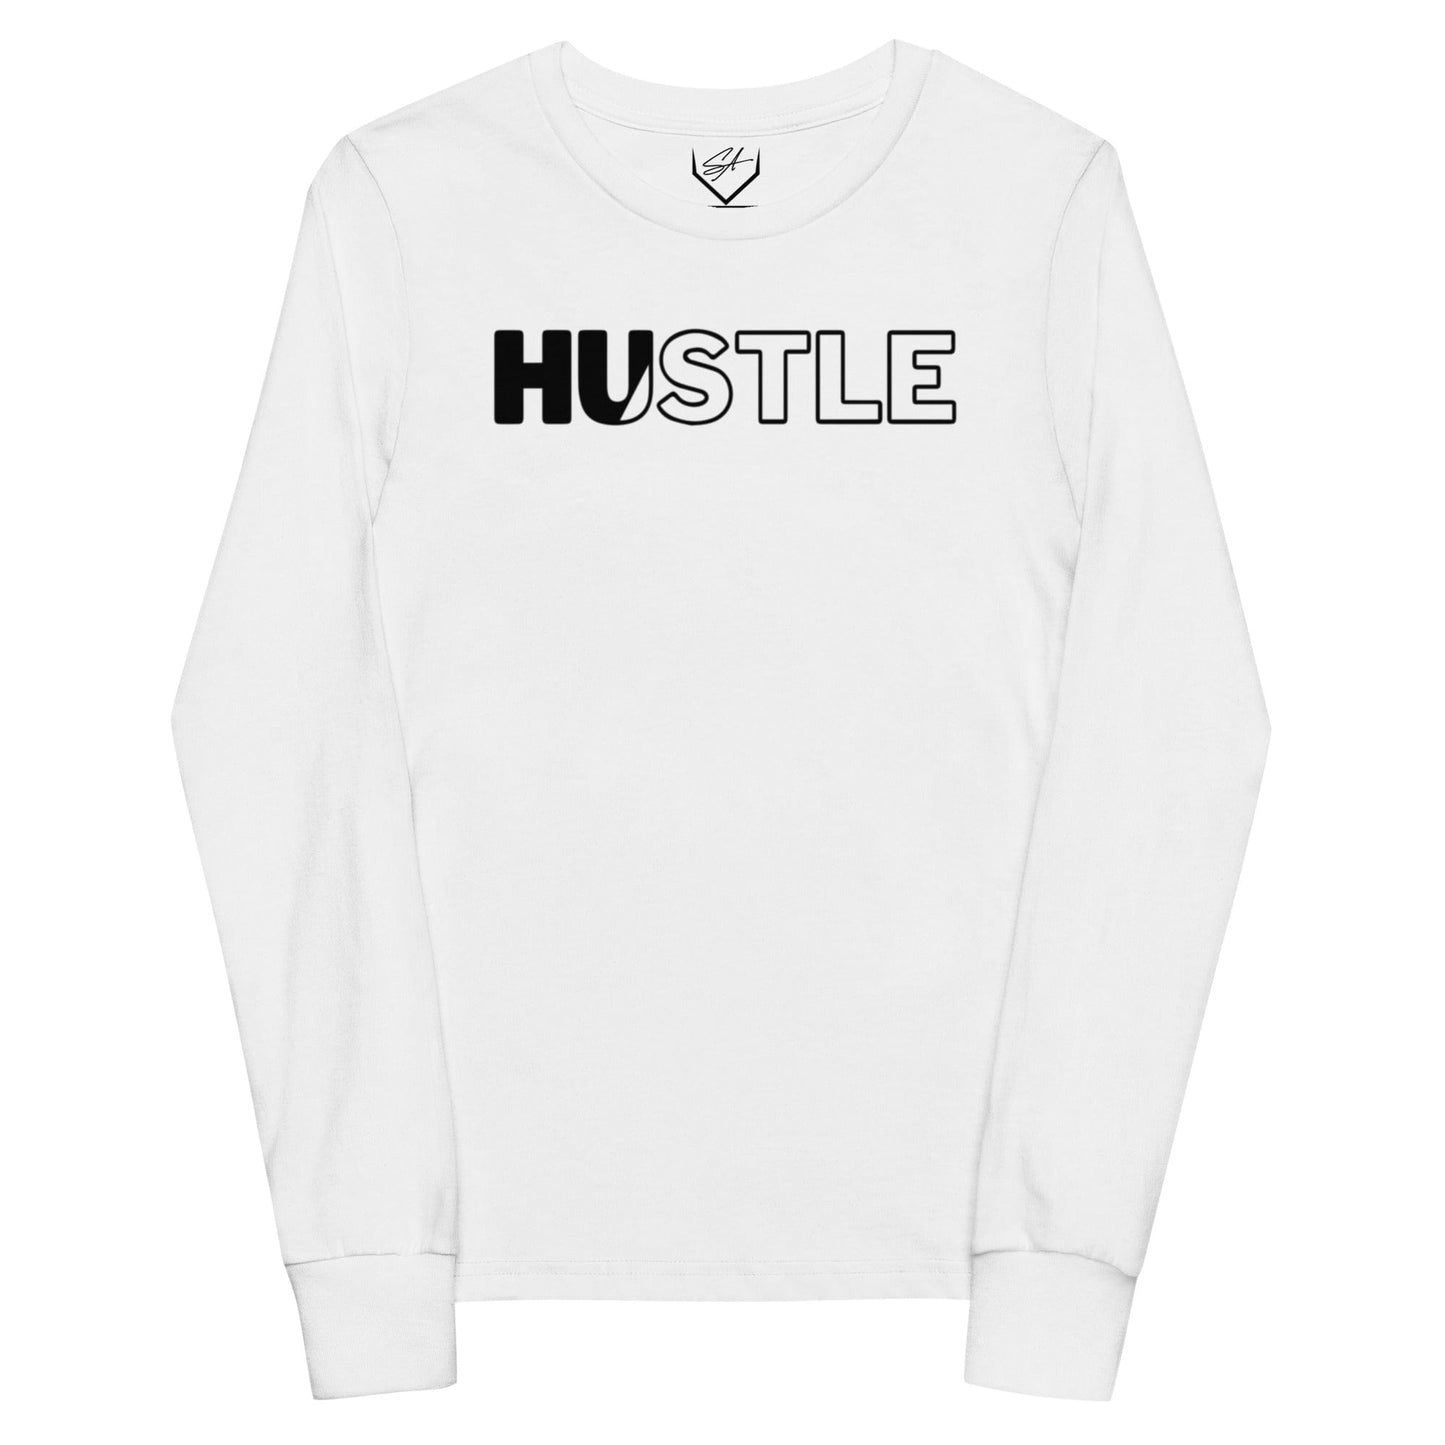 Hustle - Youth Long Sleeve